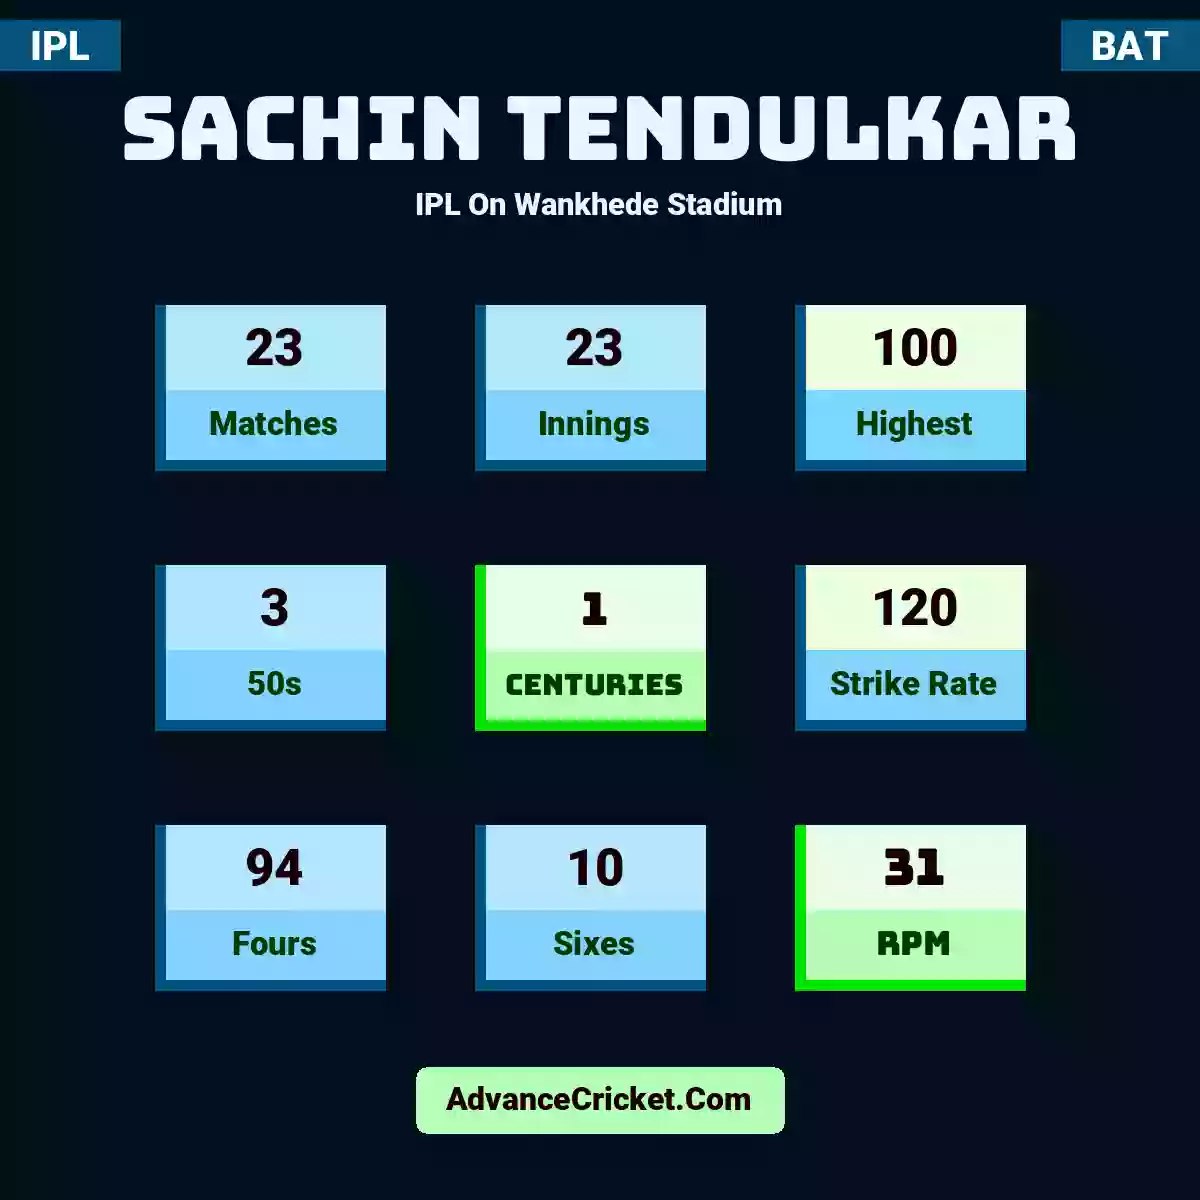 Sachin Tendulkar IPL  On Wankhede Stadium, Sachin Tendulkar played 23 matches, scored 100 runs as highest, 3 half-centuries, and 1 centuries, with a strike rate of 120. S.Tendulkar hit 94 fours and 10 sixes, with an RPM of 31.